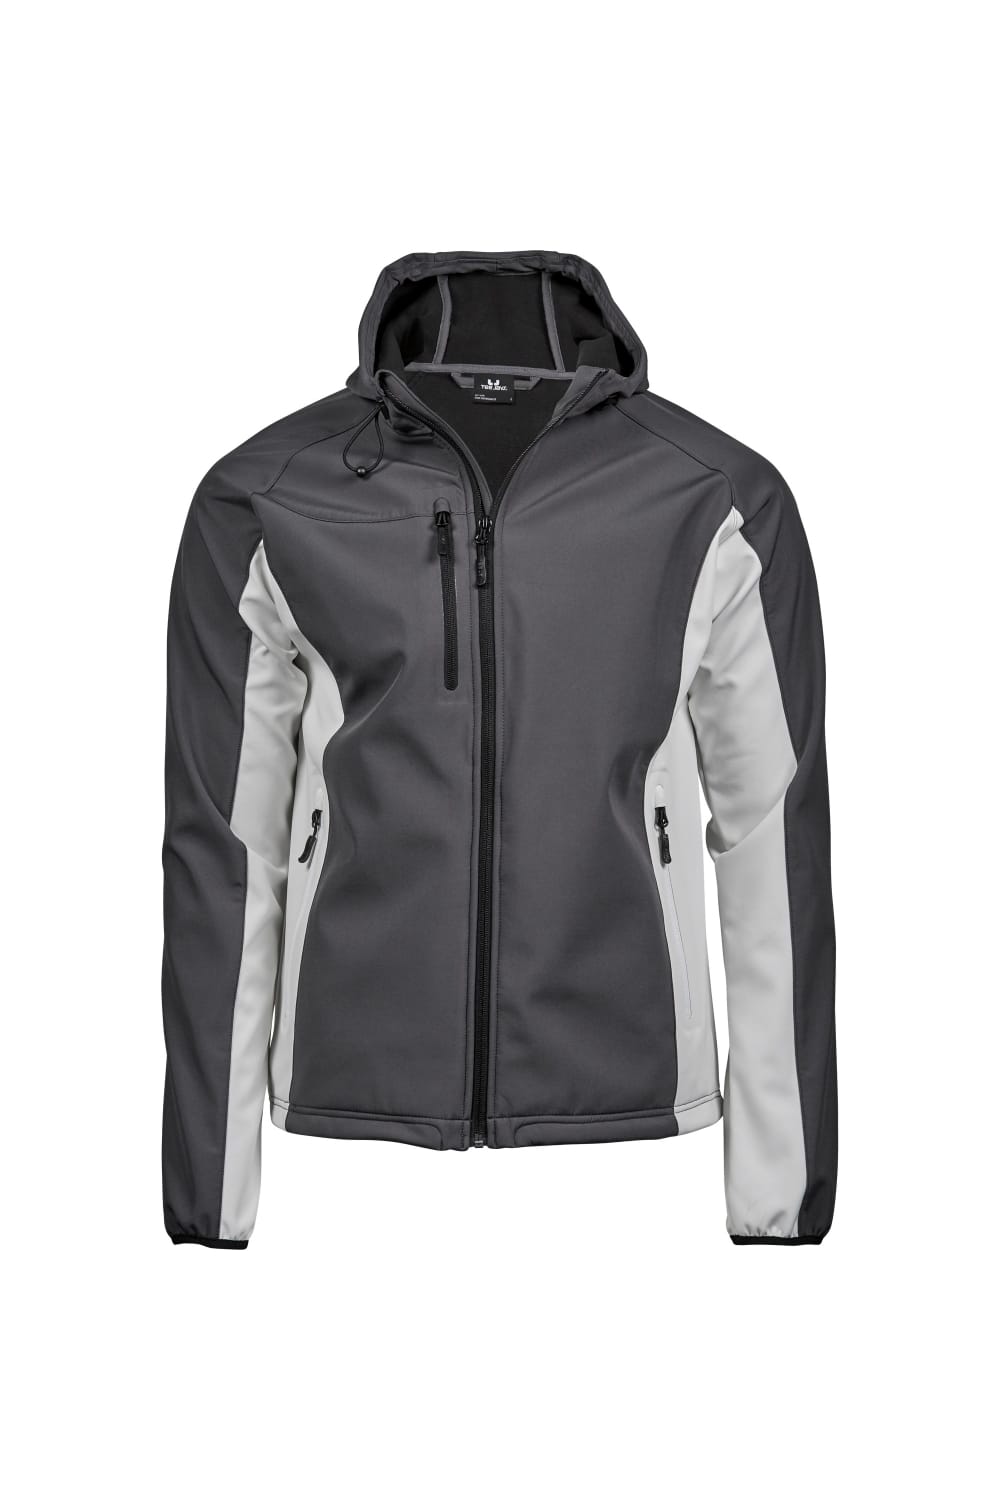 Tee Jays Mens Lightweight Performance Hooded Soft Shell Jacket (Dark Gray/Off White)